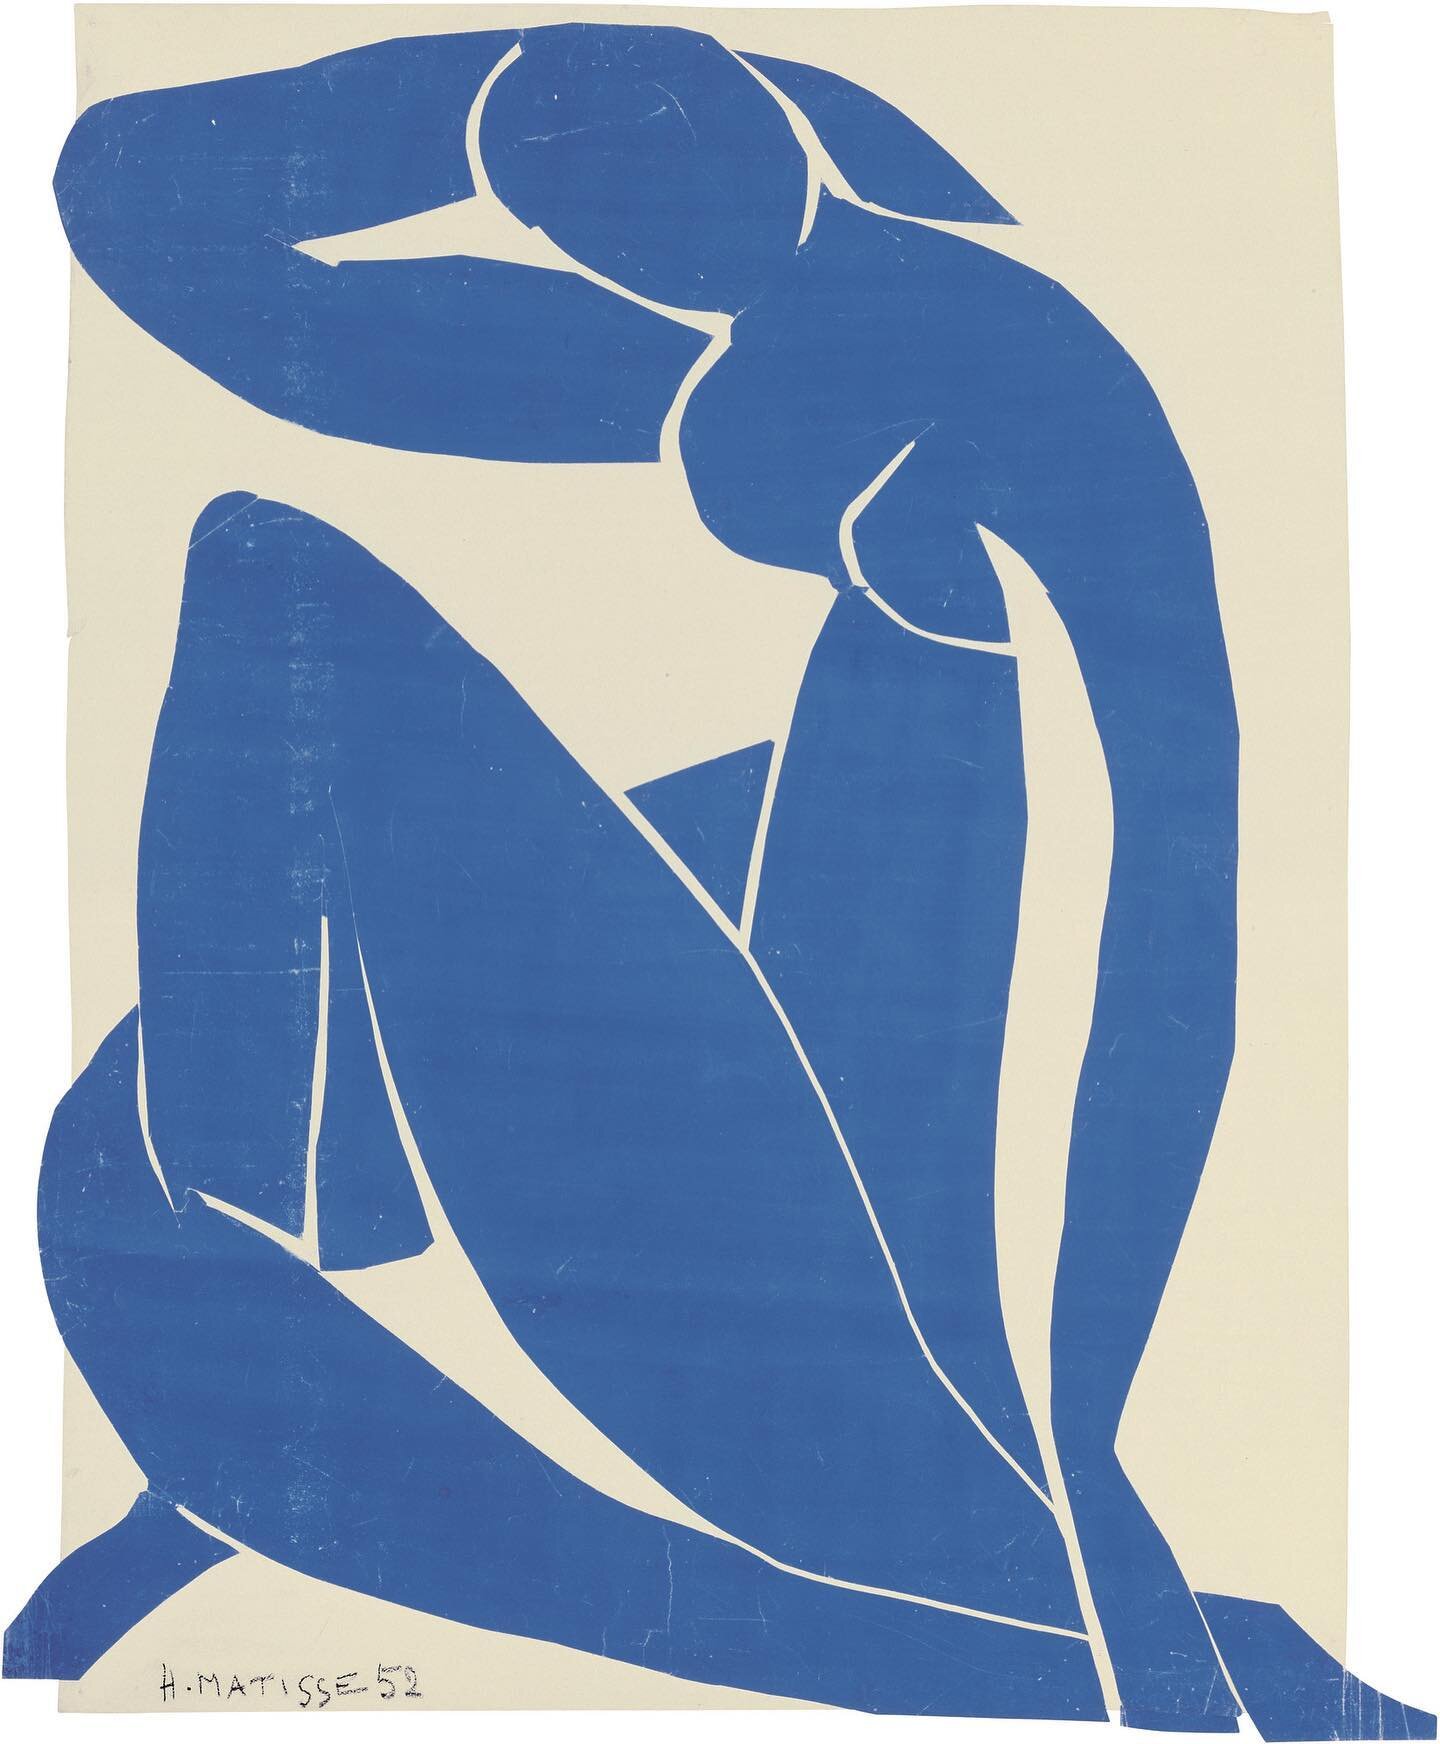 Henri Matisse&rsquo;s Blue Nude II, from 1952

#matisse #henrimatisse #art #dailyart